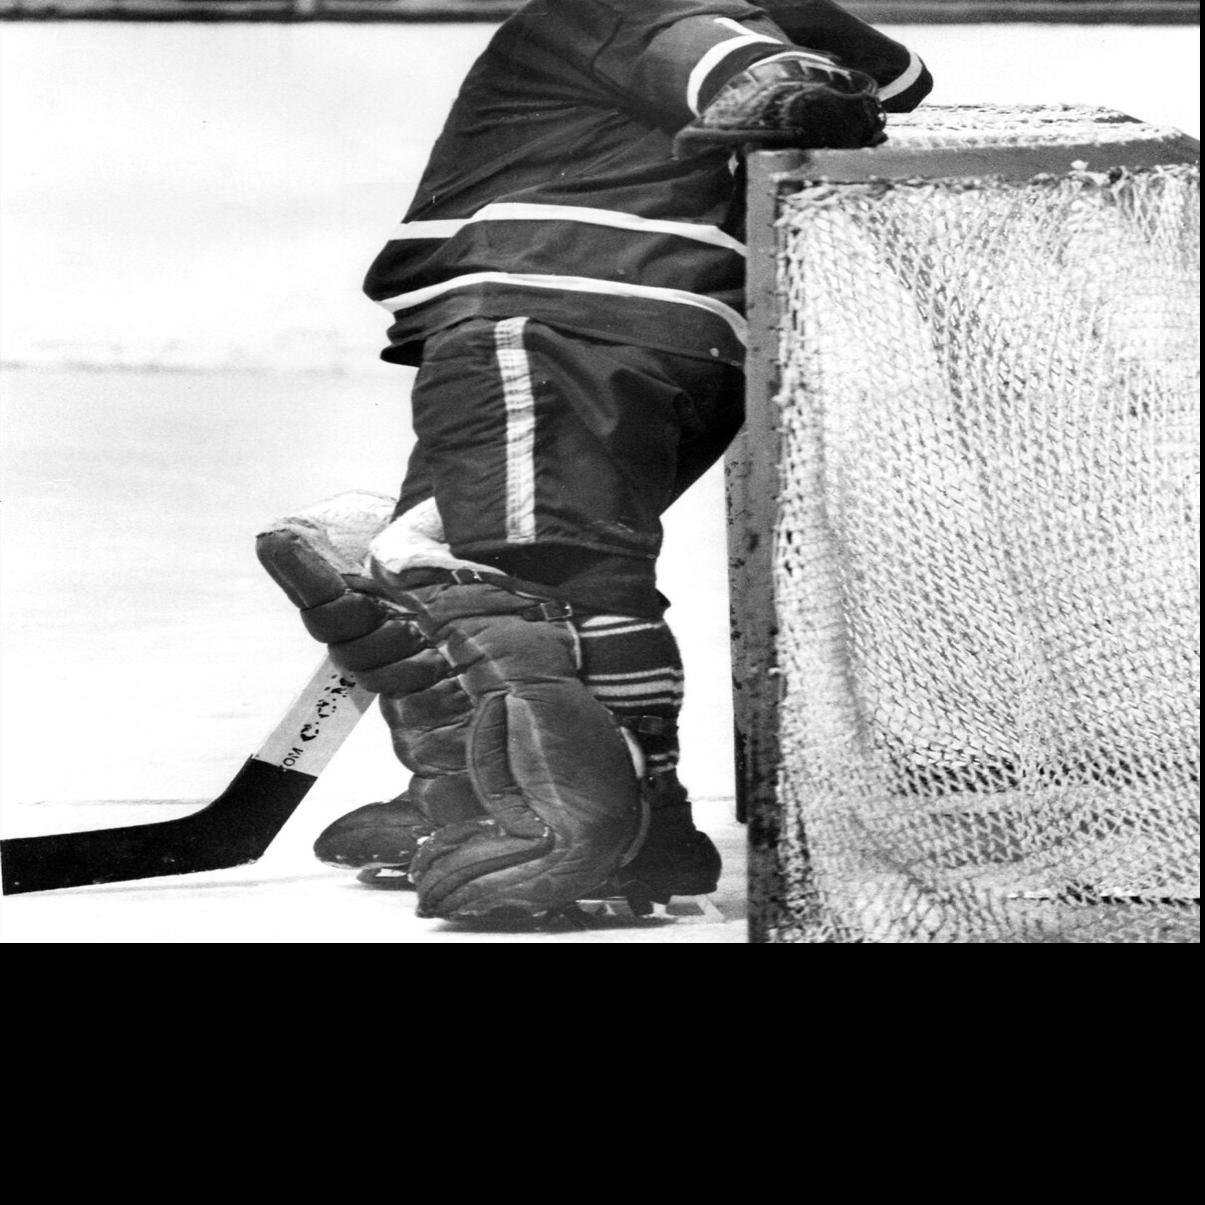 Hockey History: Toronto Maple Leafs Johnny Bower Plays Last Game